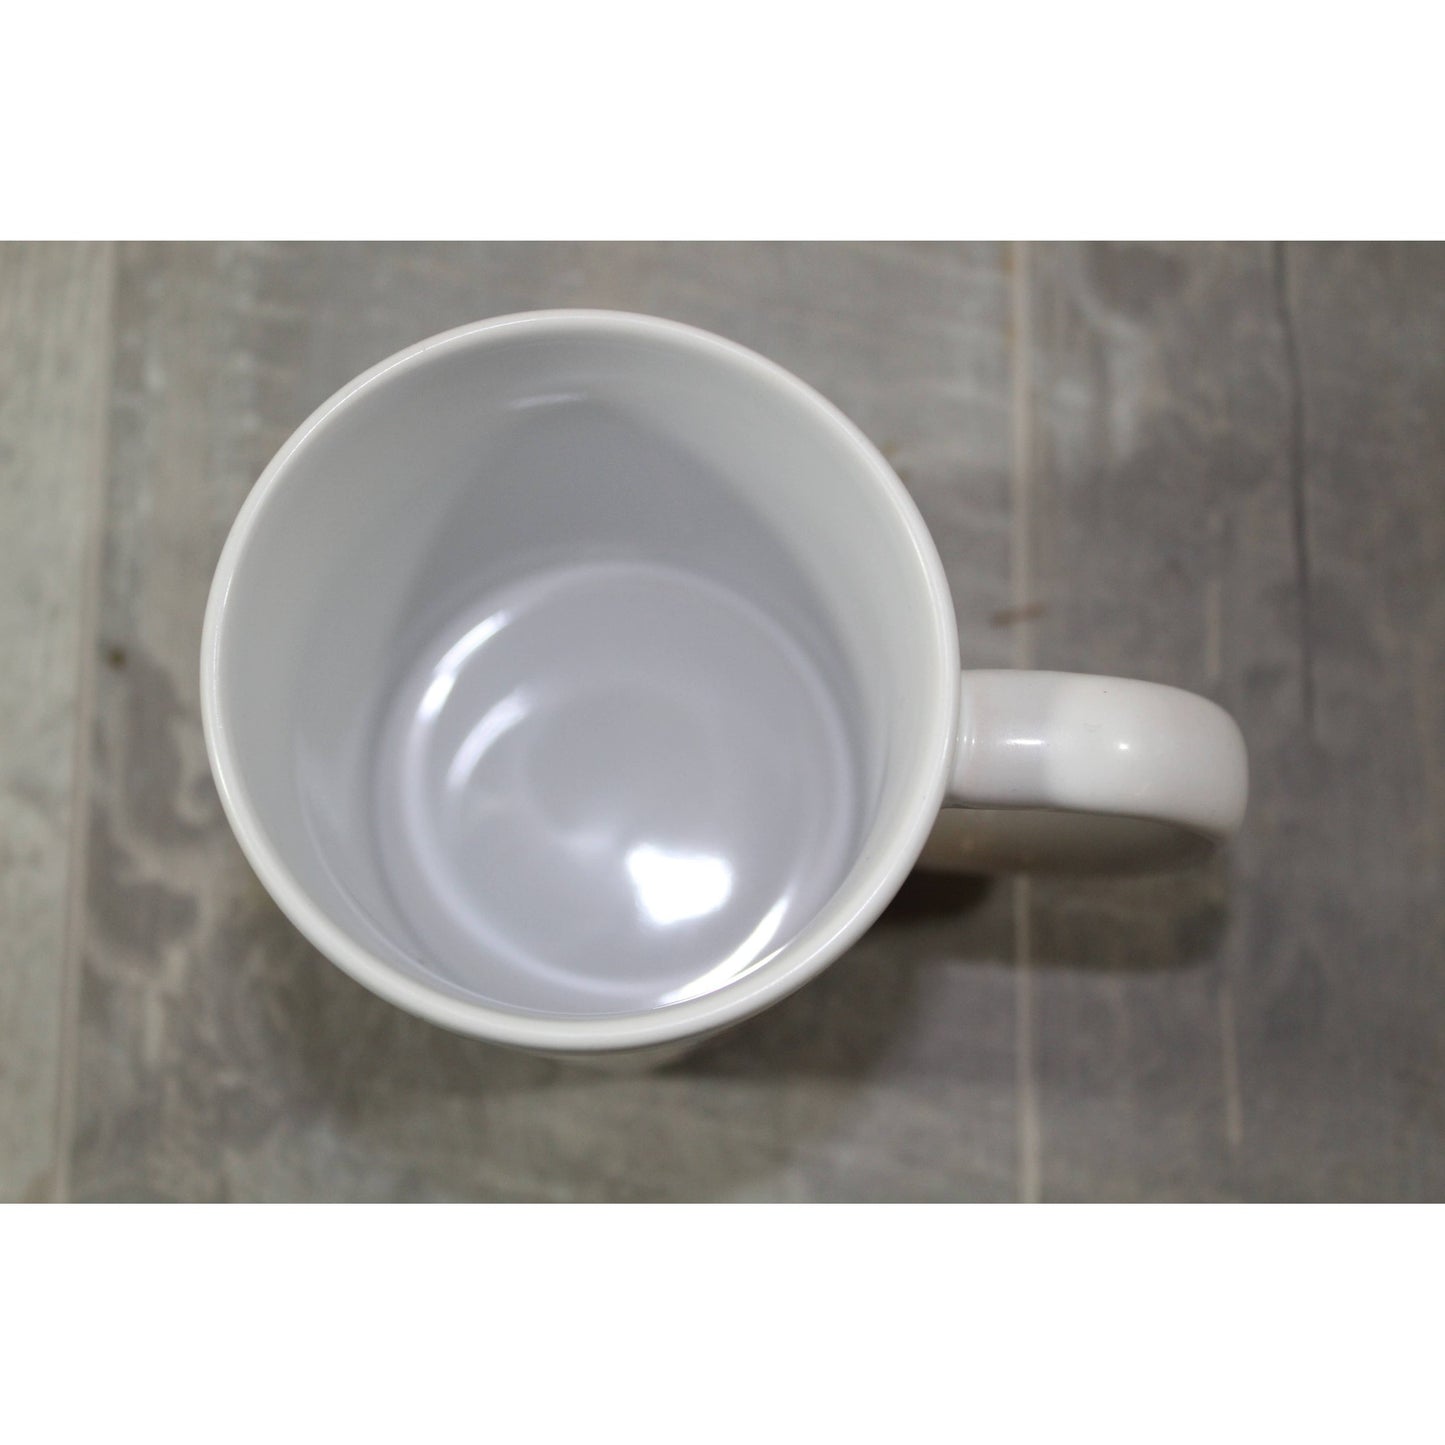 Cocaine CareBears Ceramic Mug | Coffee Tea Cup | 15oz